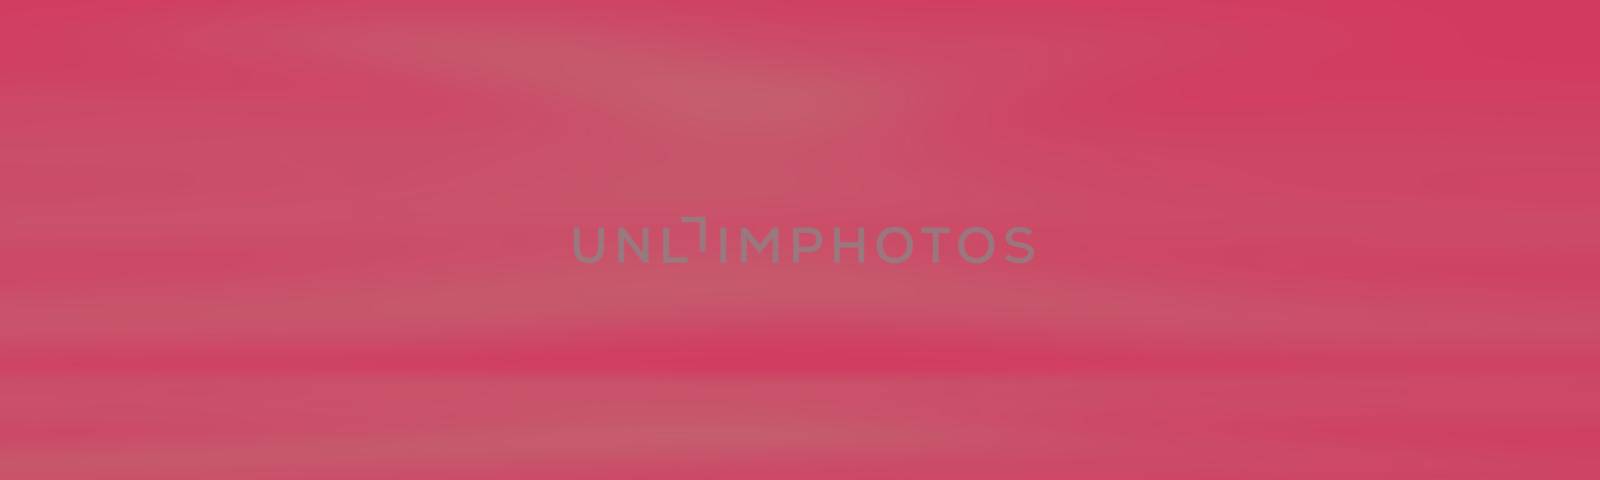 Photographic Pink Gradient Seamless studio backdrop Background.